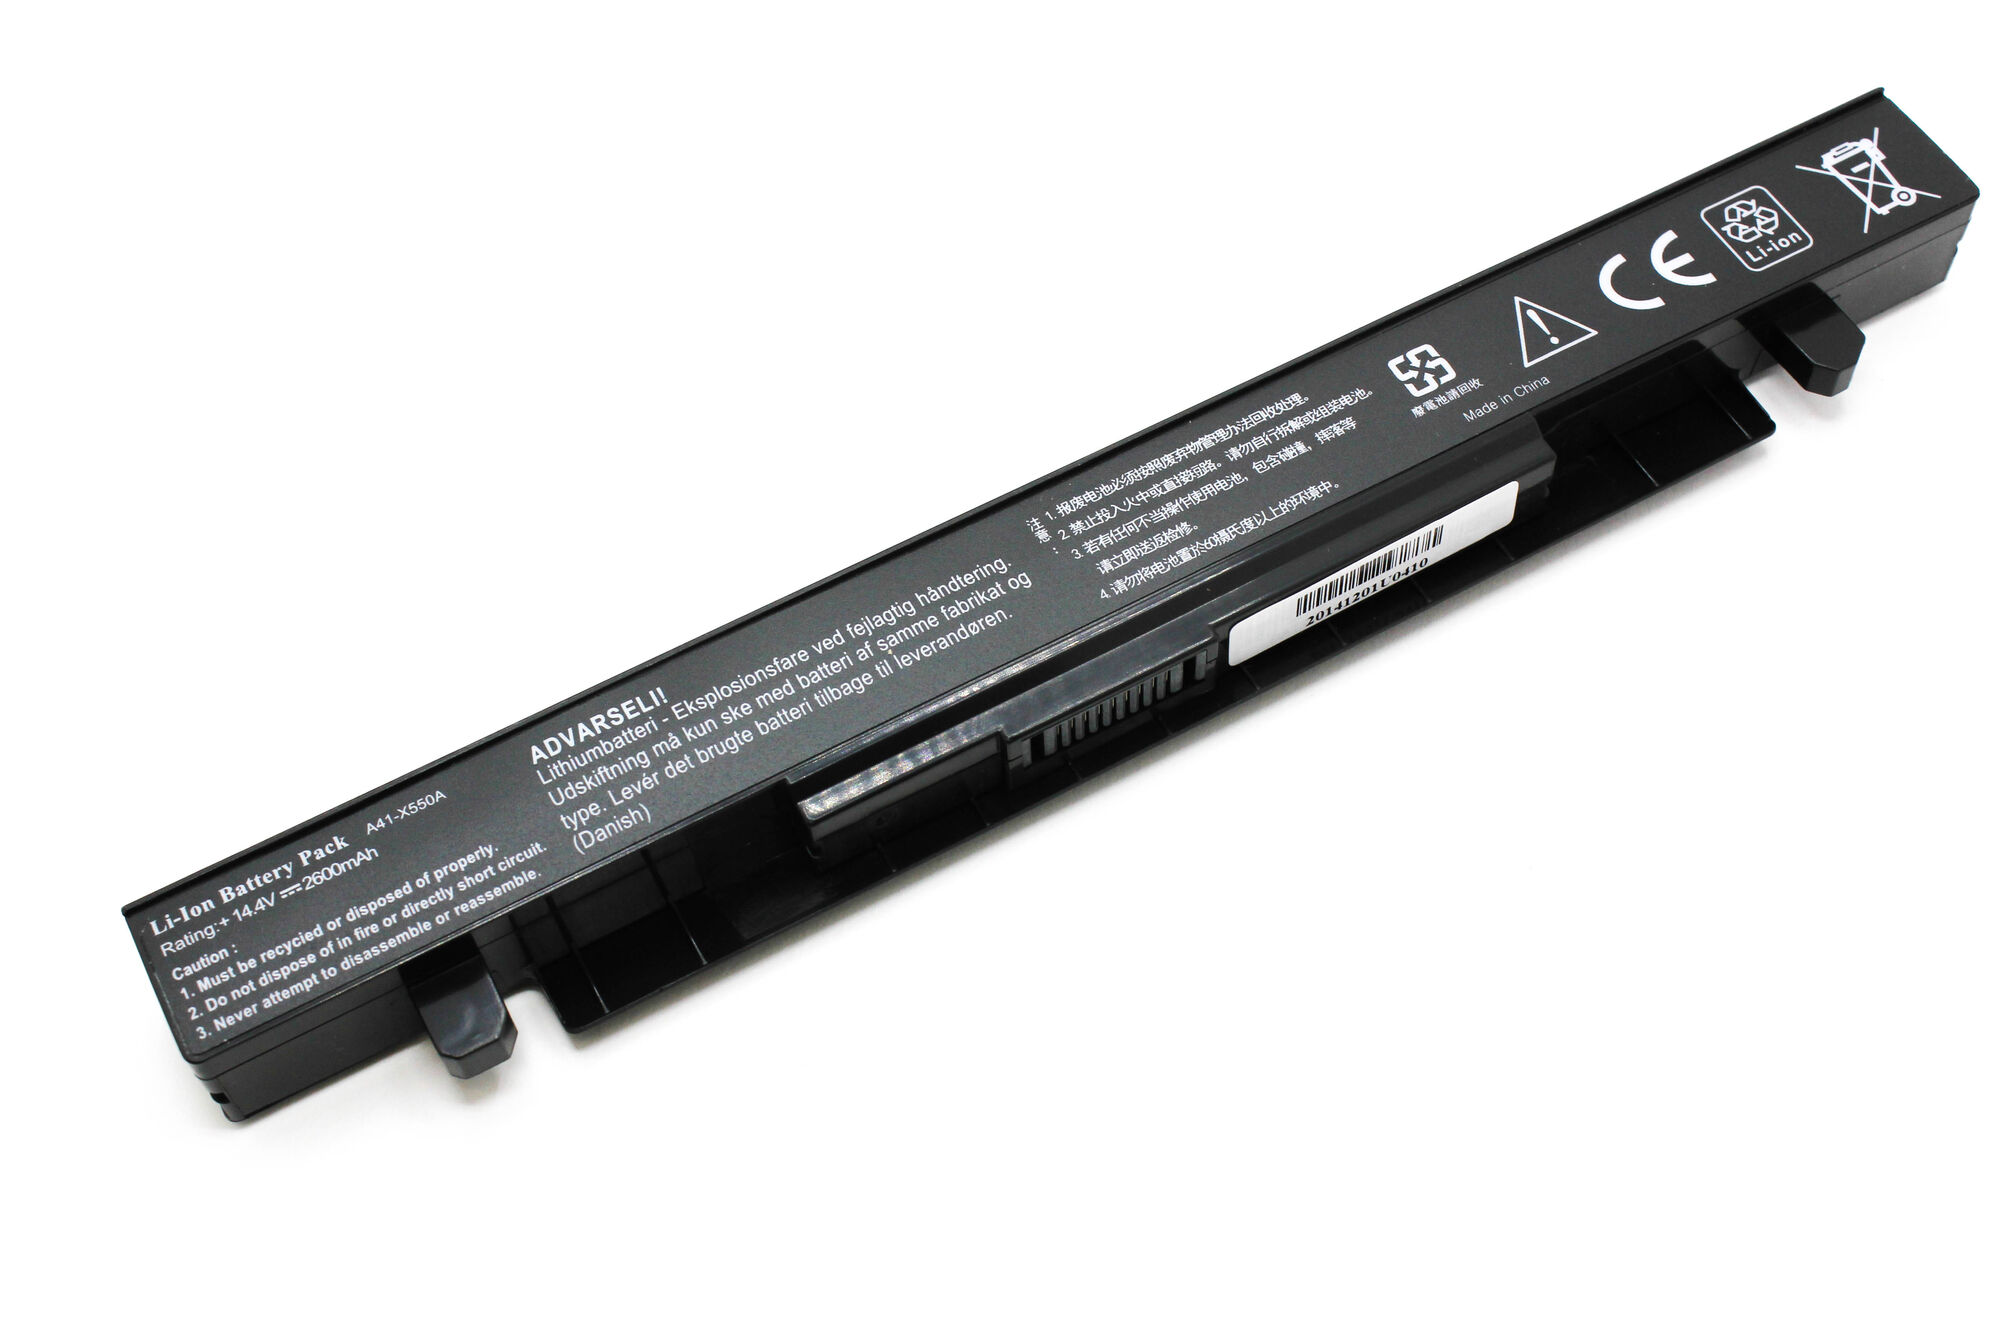 Аккумулятор для Asus X550A X450 K550 K450 (14.4V 2200mAh) p/n: A41-X550A